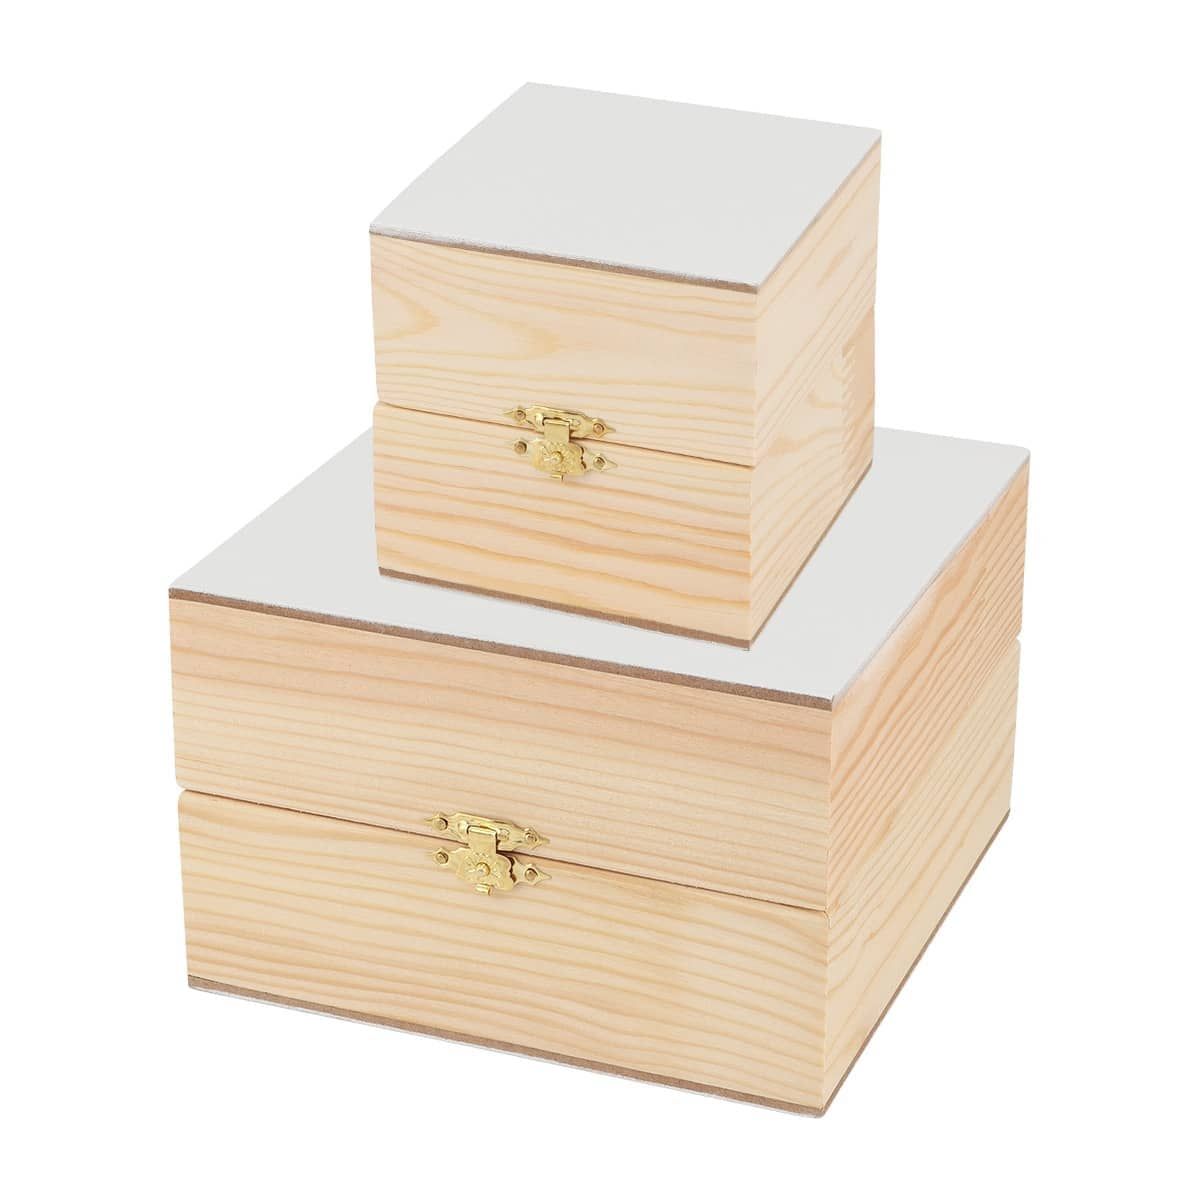 Da Vinci Art, Photo & Keepsake Wood Box Kits